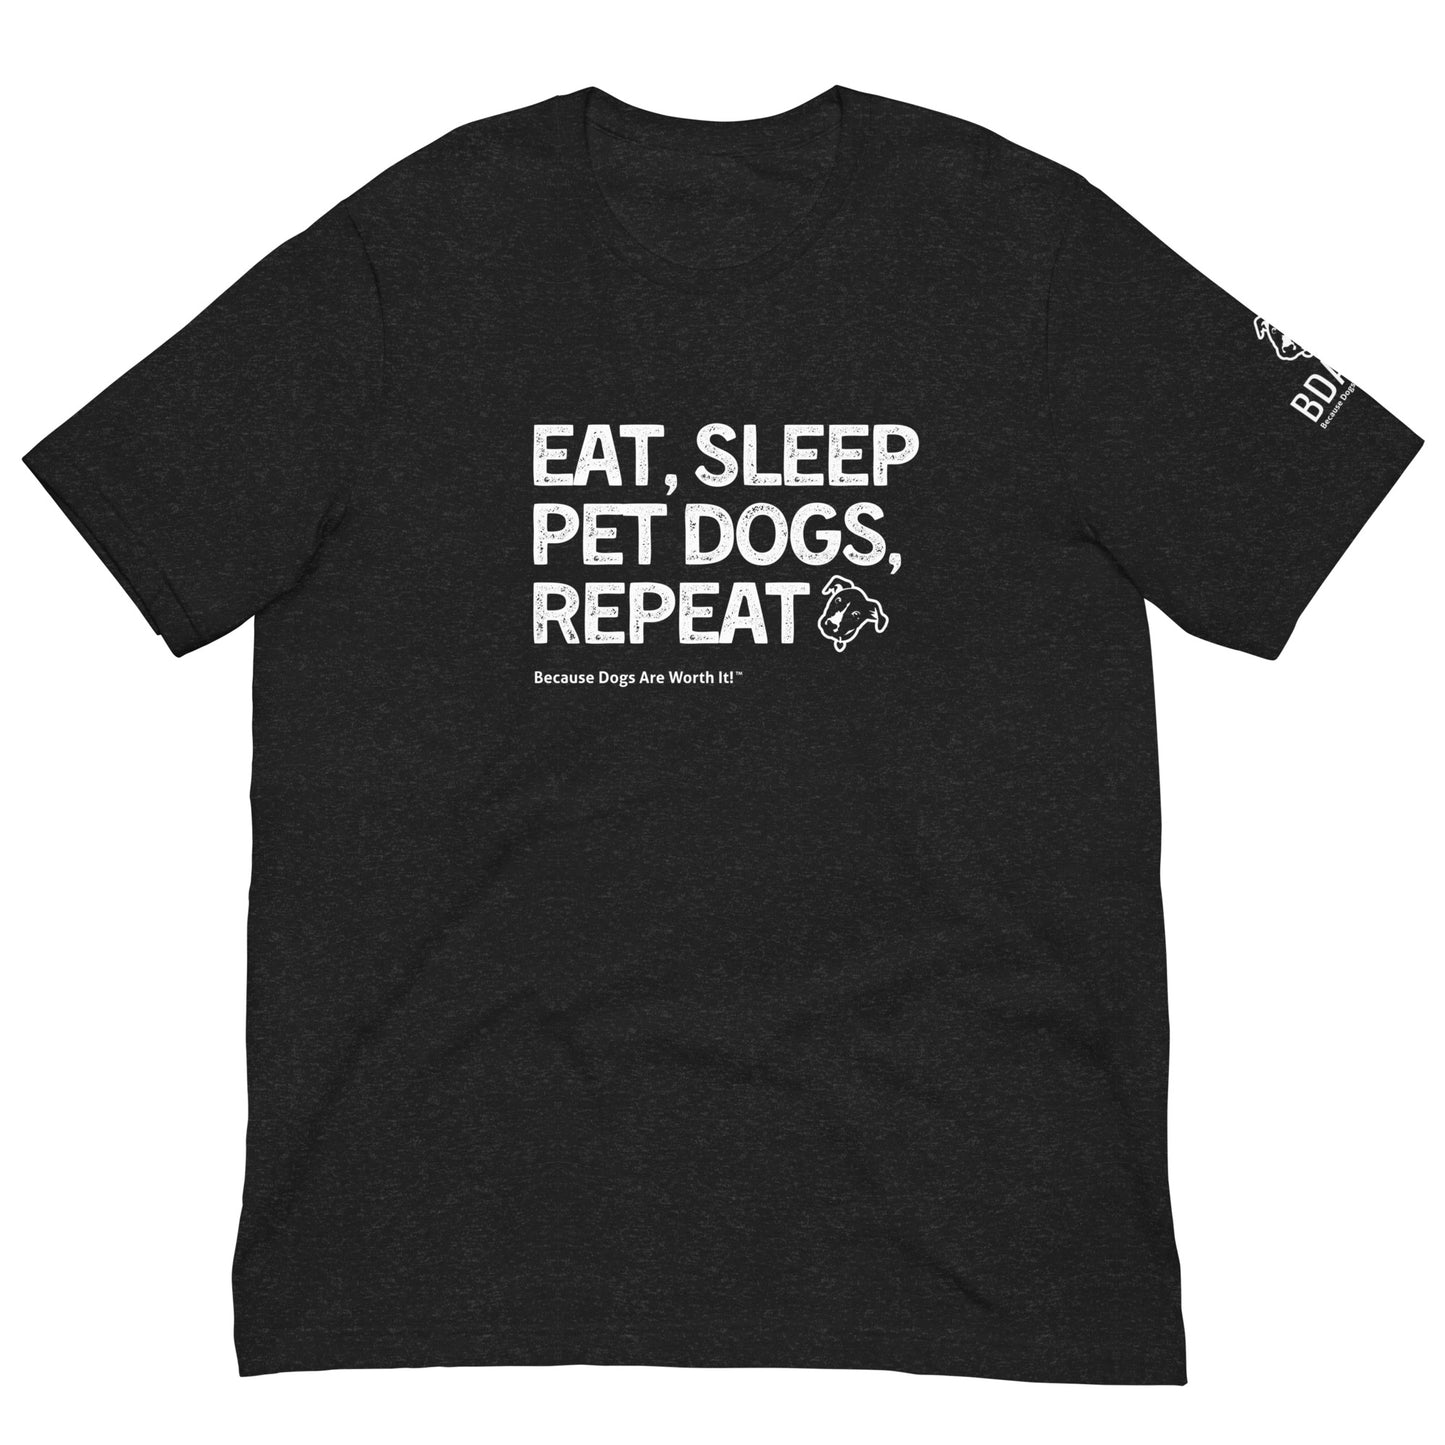 Eat, Sleep, Pet Dogs, Repeat Tee